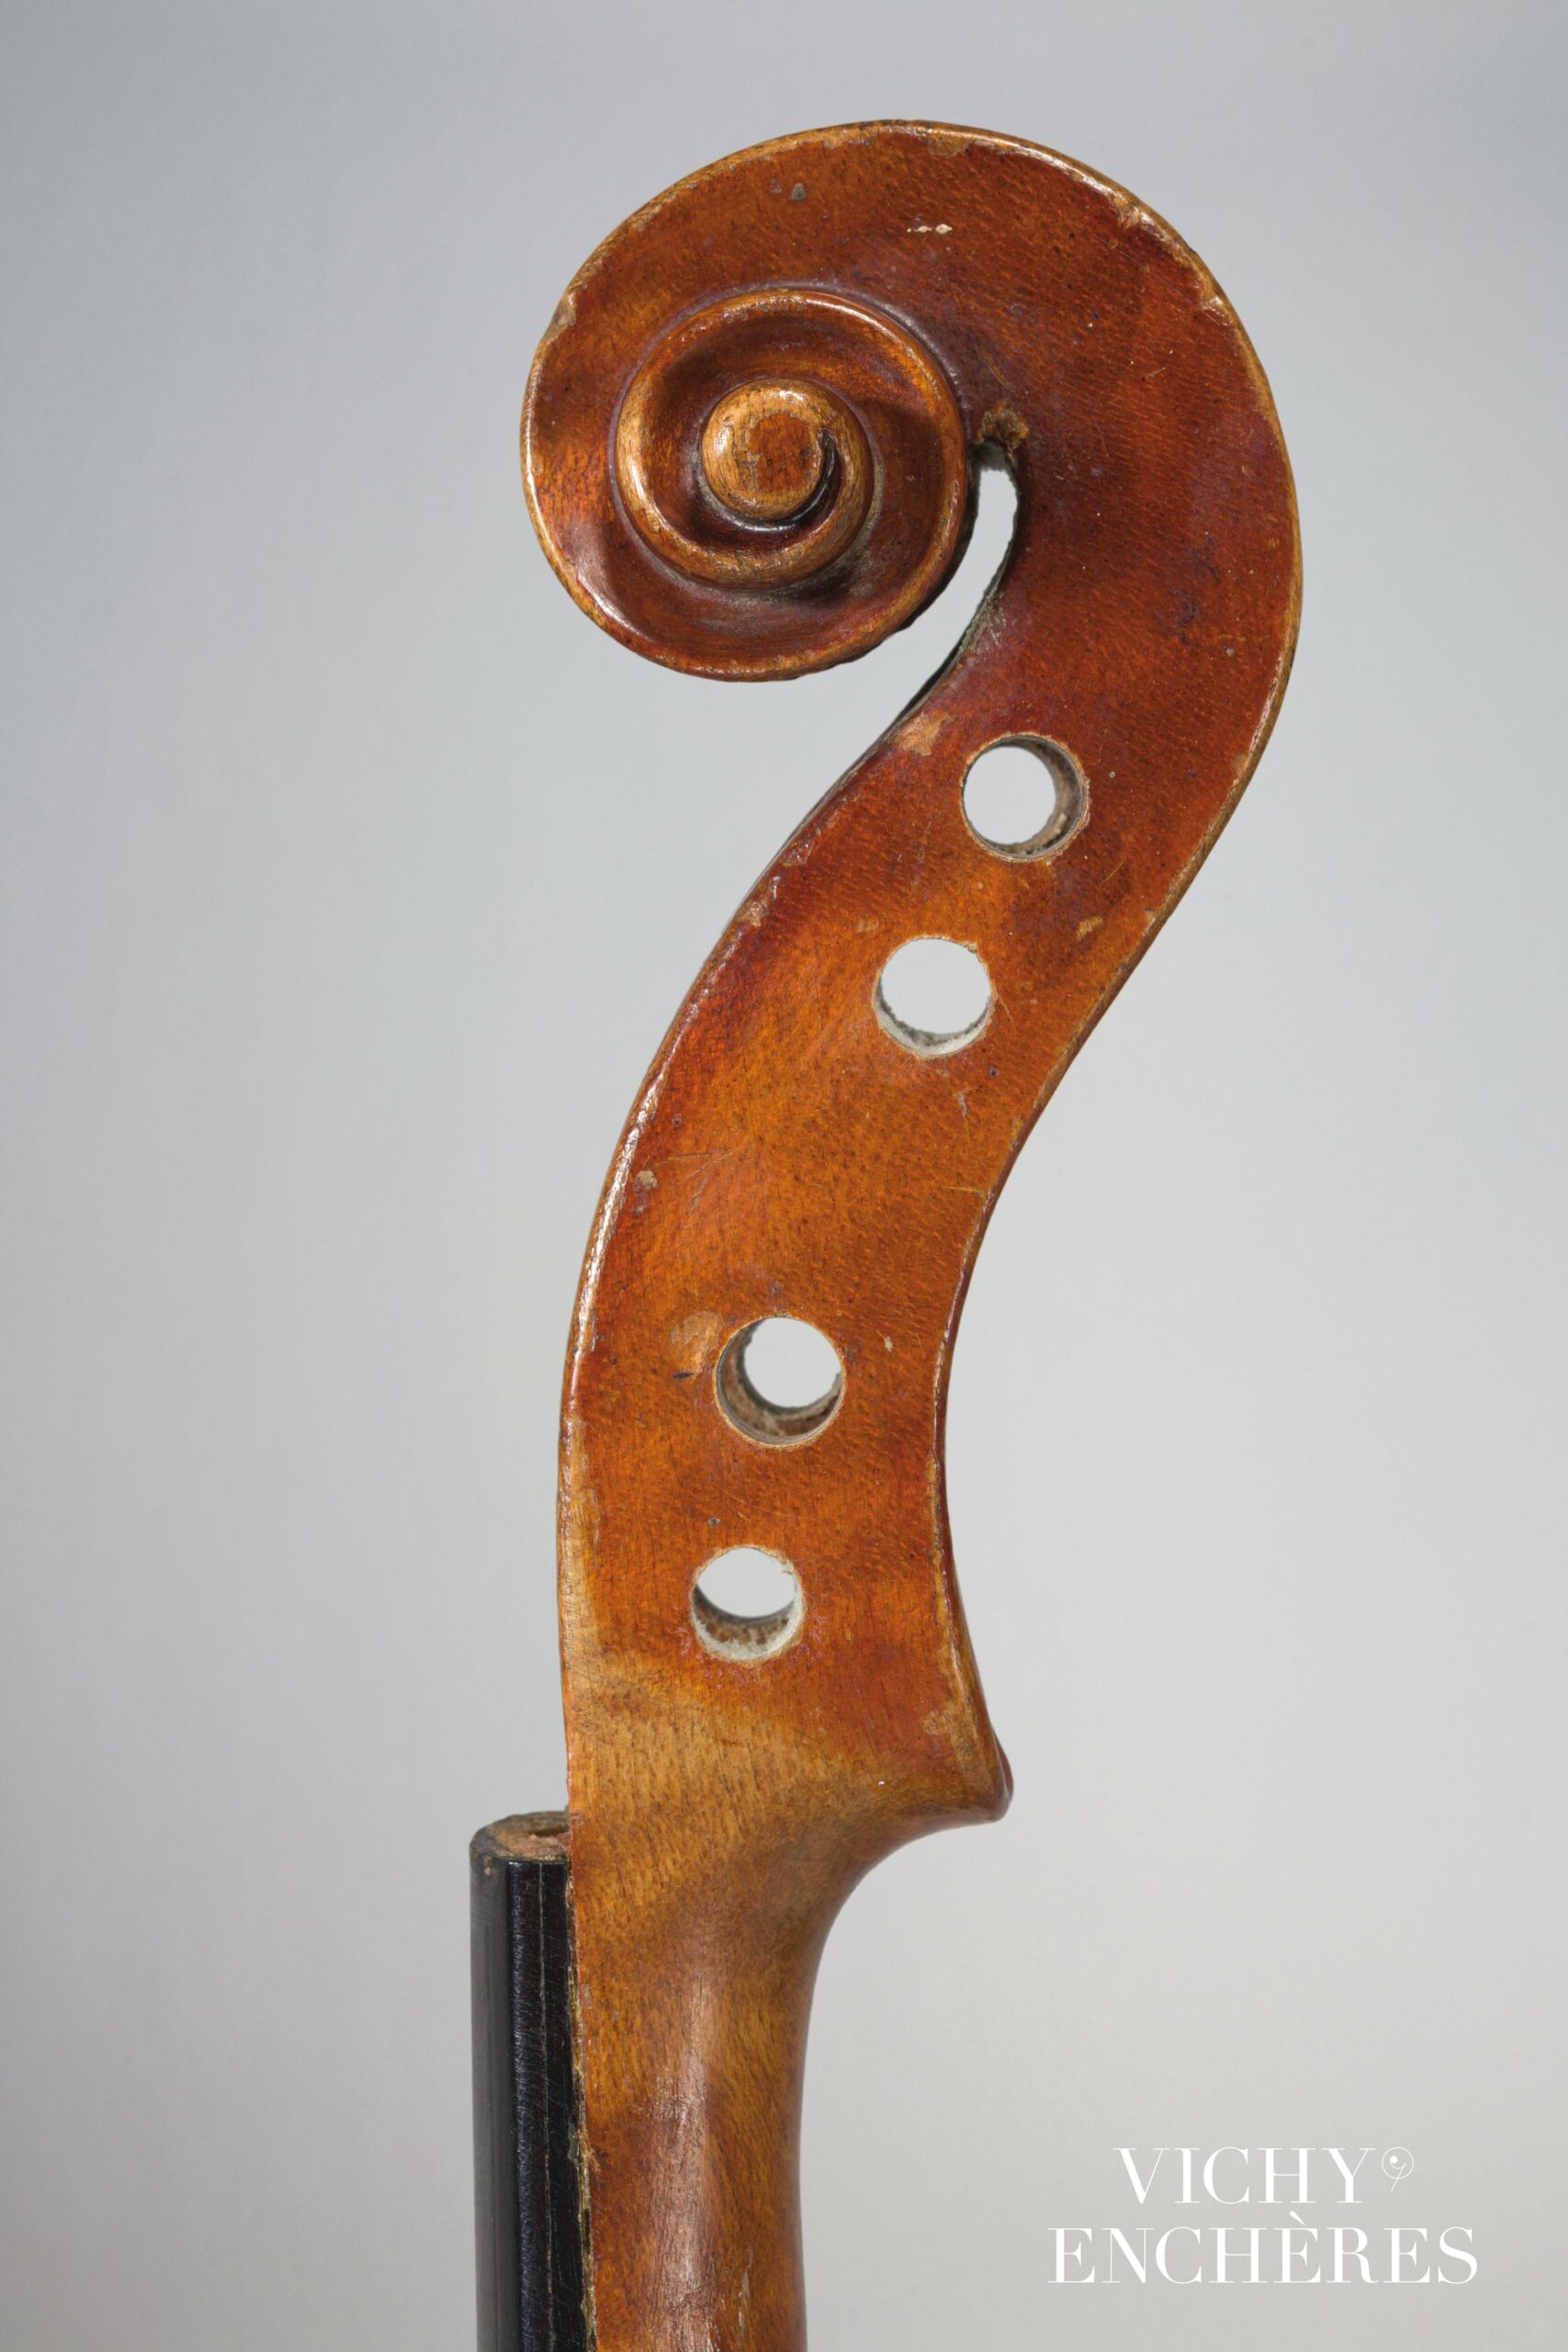 Exceptionnel violon de Ferdinand GAGLIANO Instrument mis en vente par Vichy Enchères le 1 juin 2023 © C. Darbelet